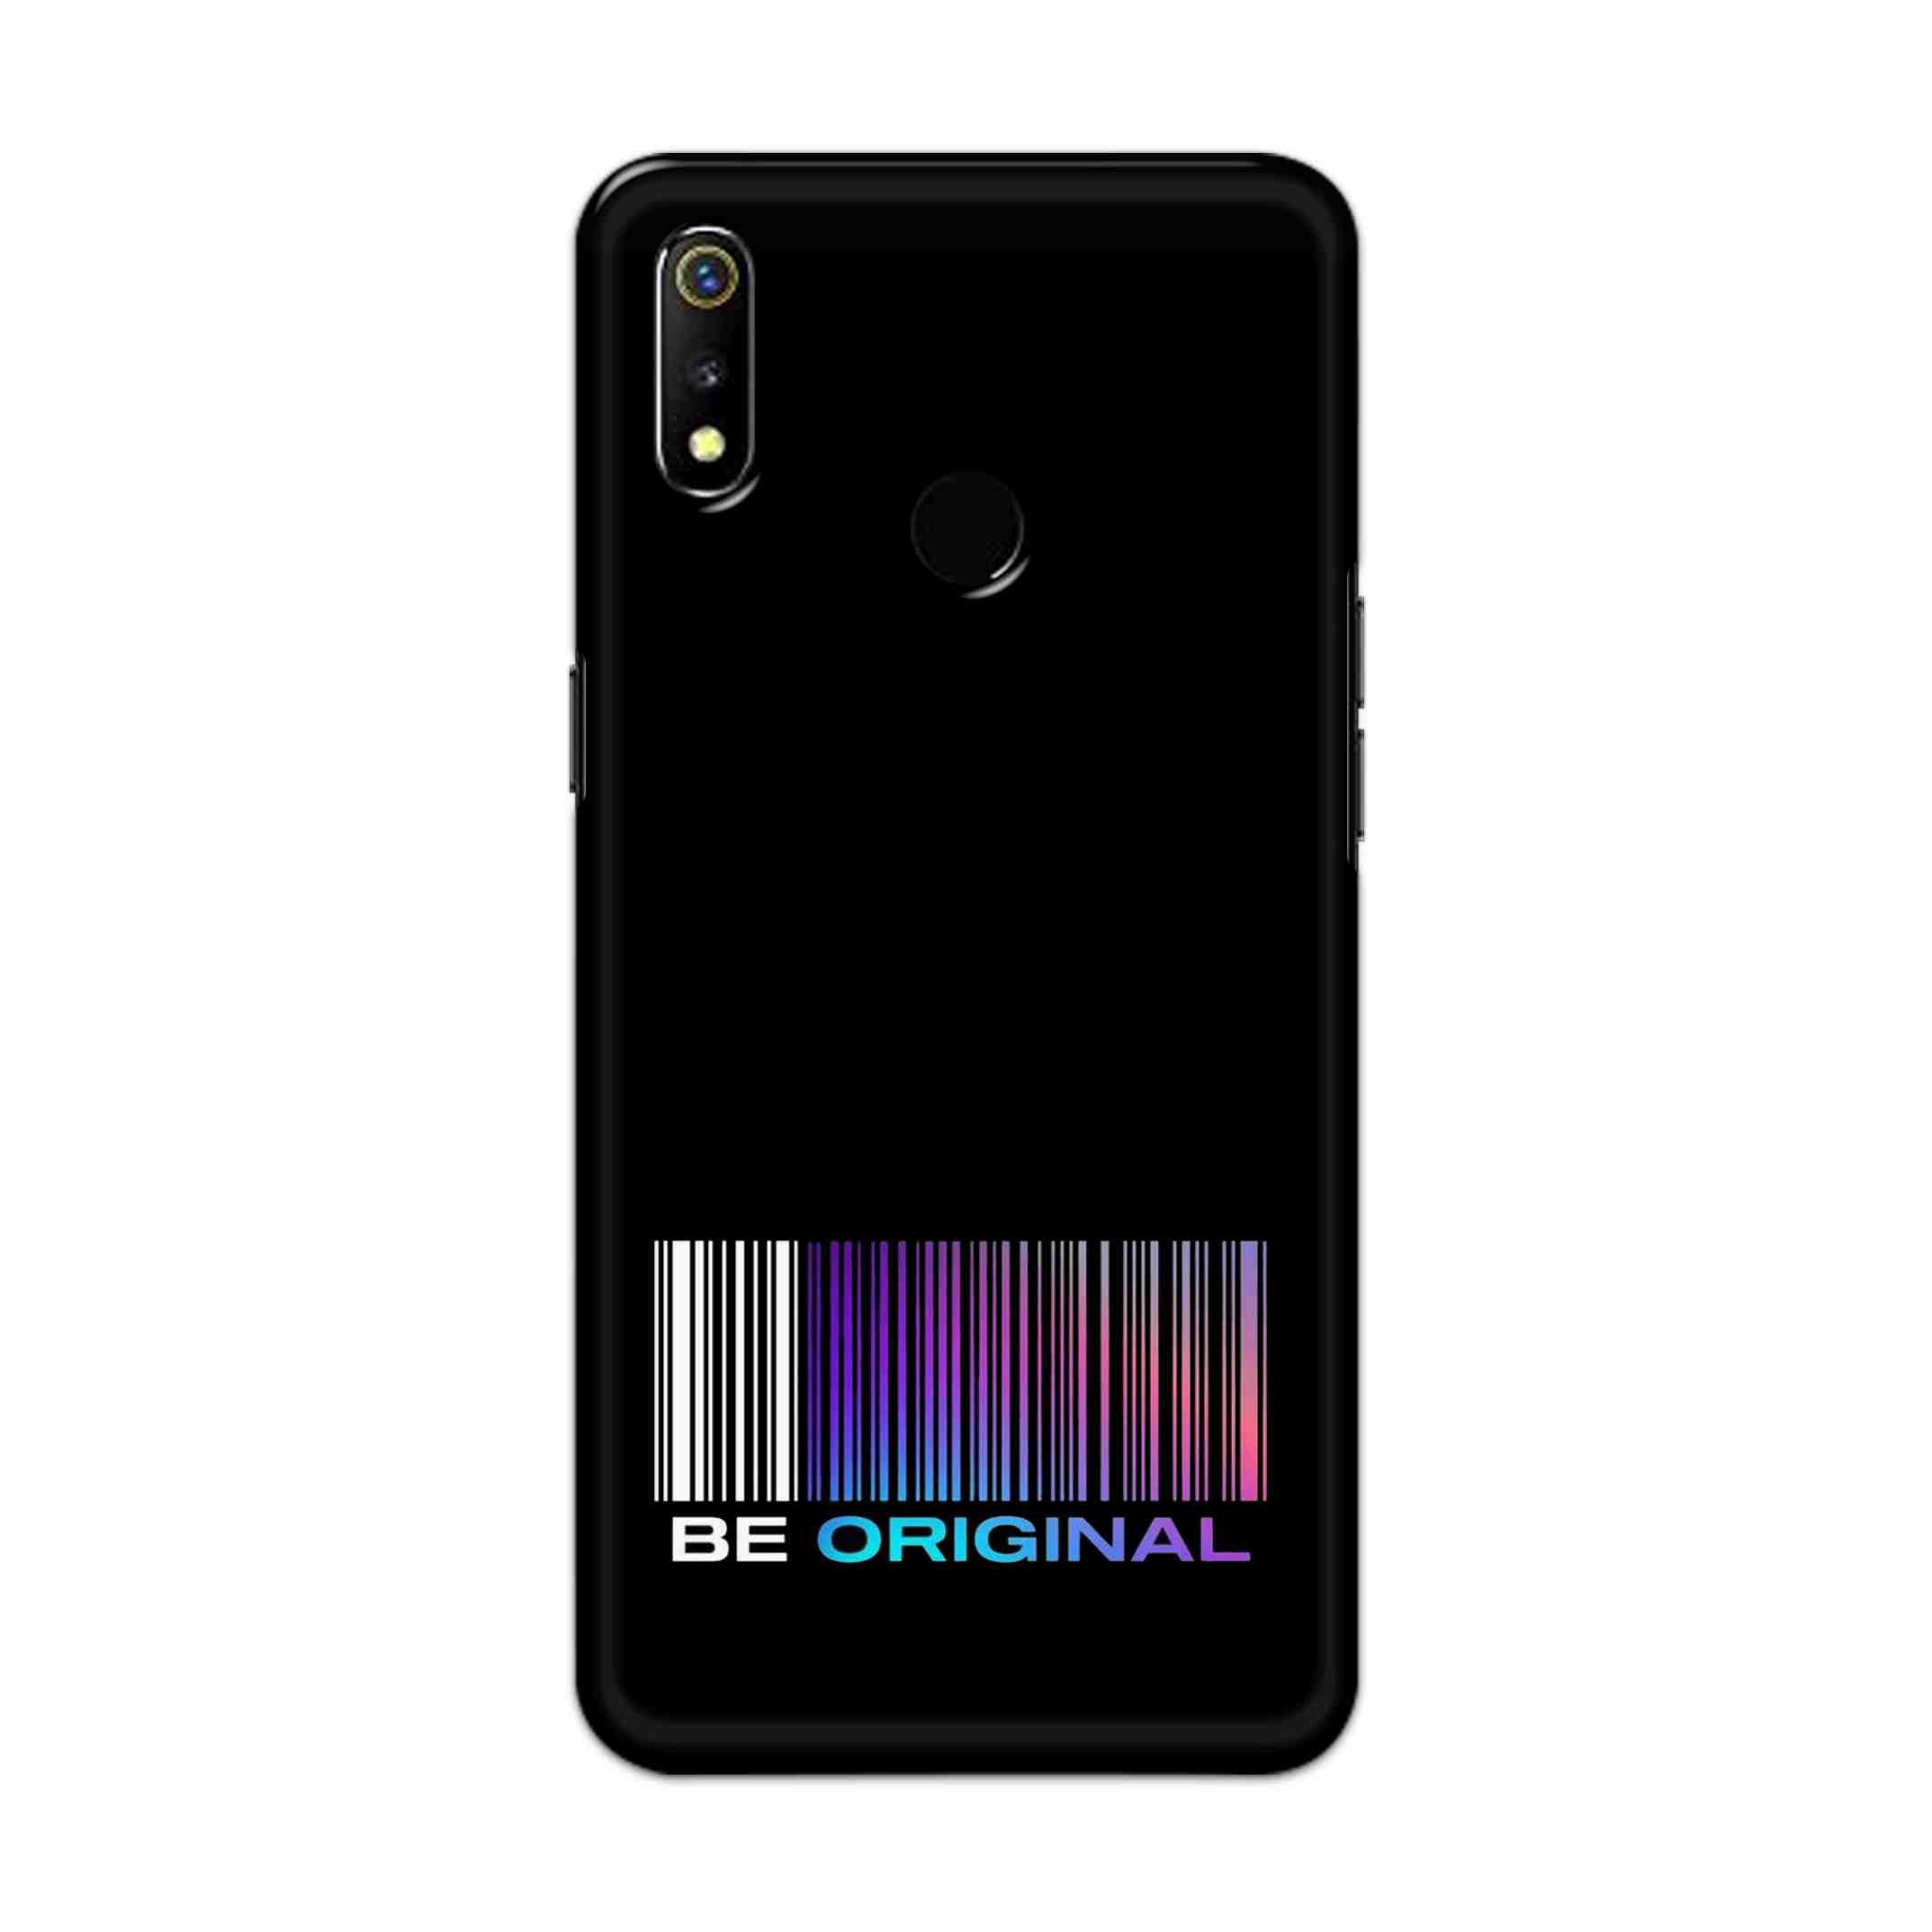 Buy Be Original Hard Back Mobile Phone Case Cover For Oppo Realme 3 Online